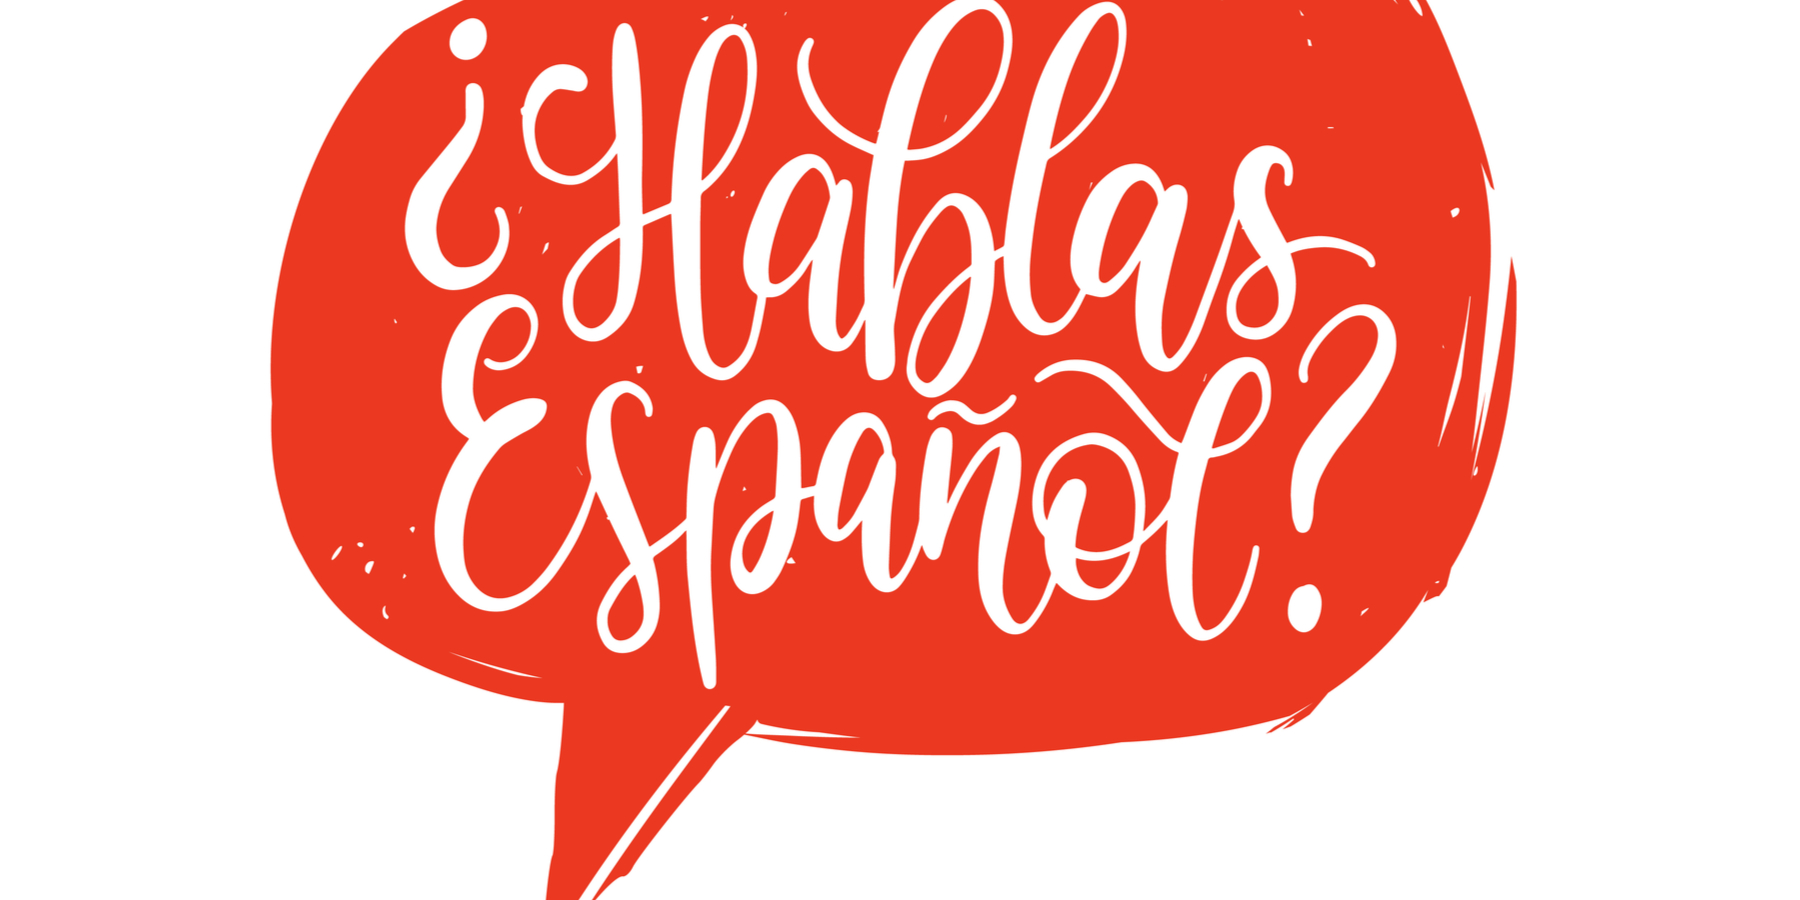 speaking spanish clipart